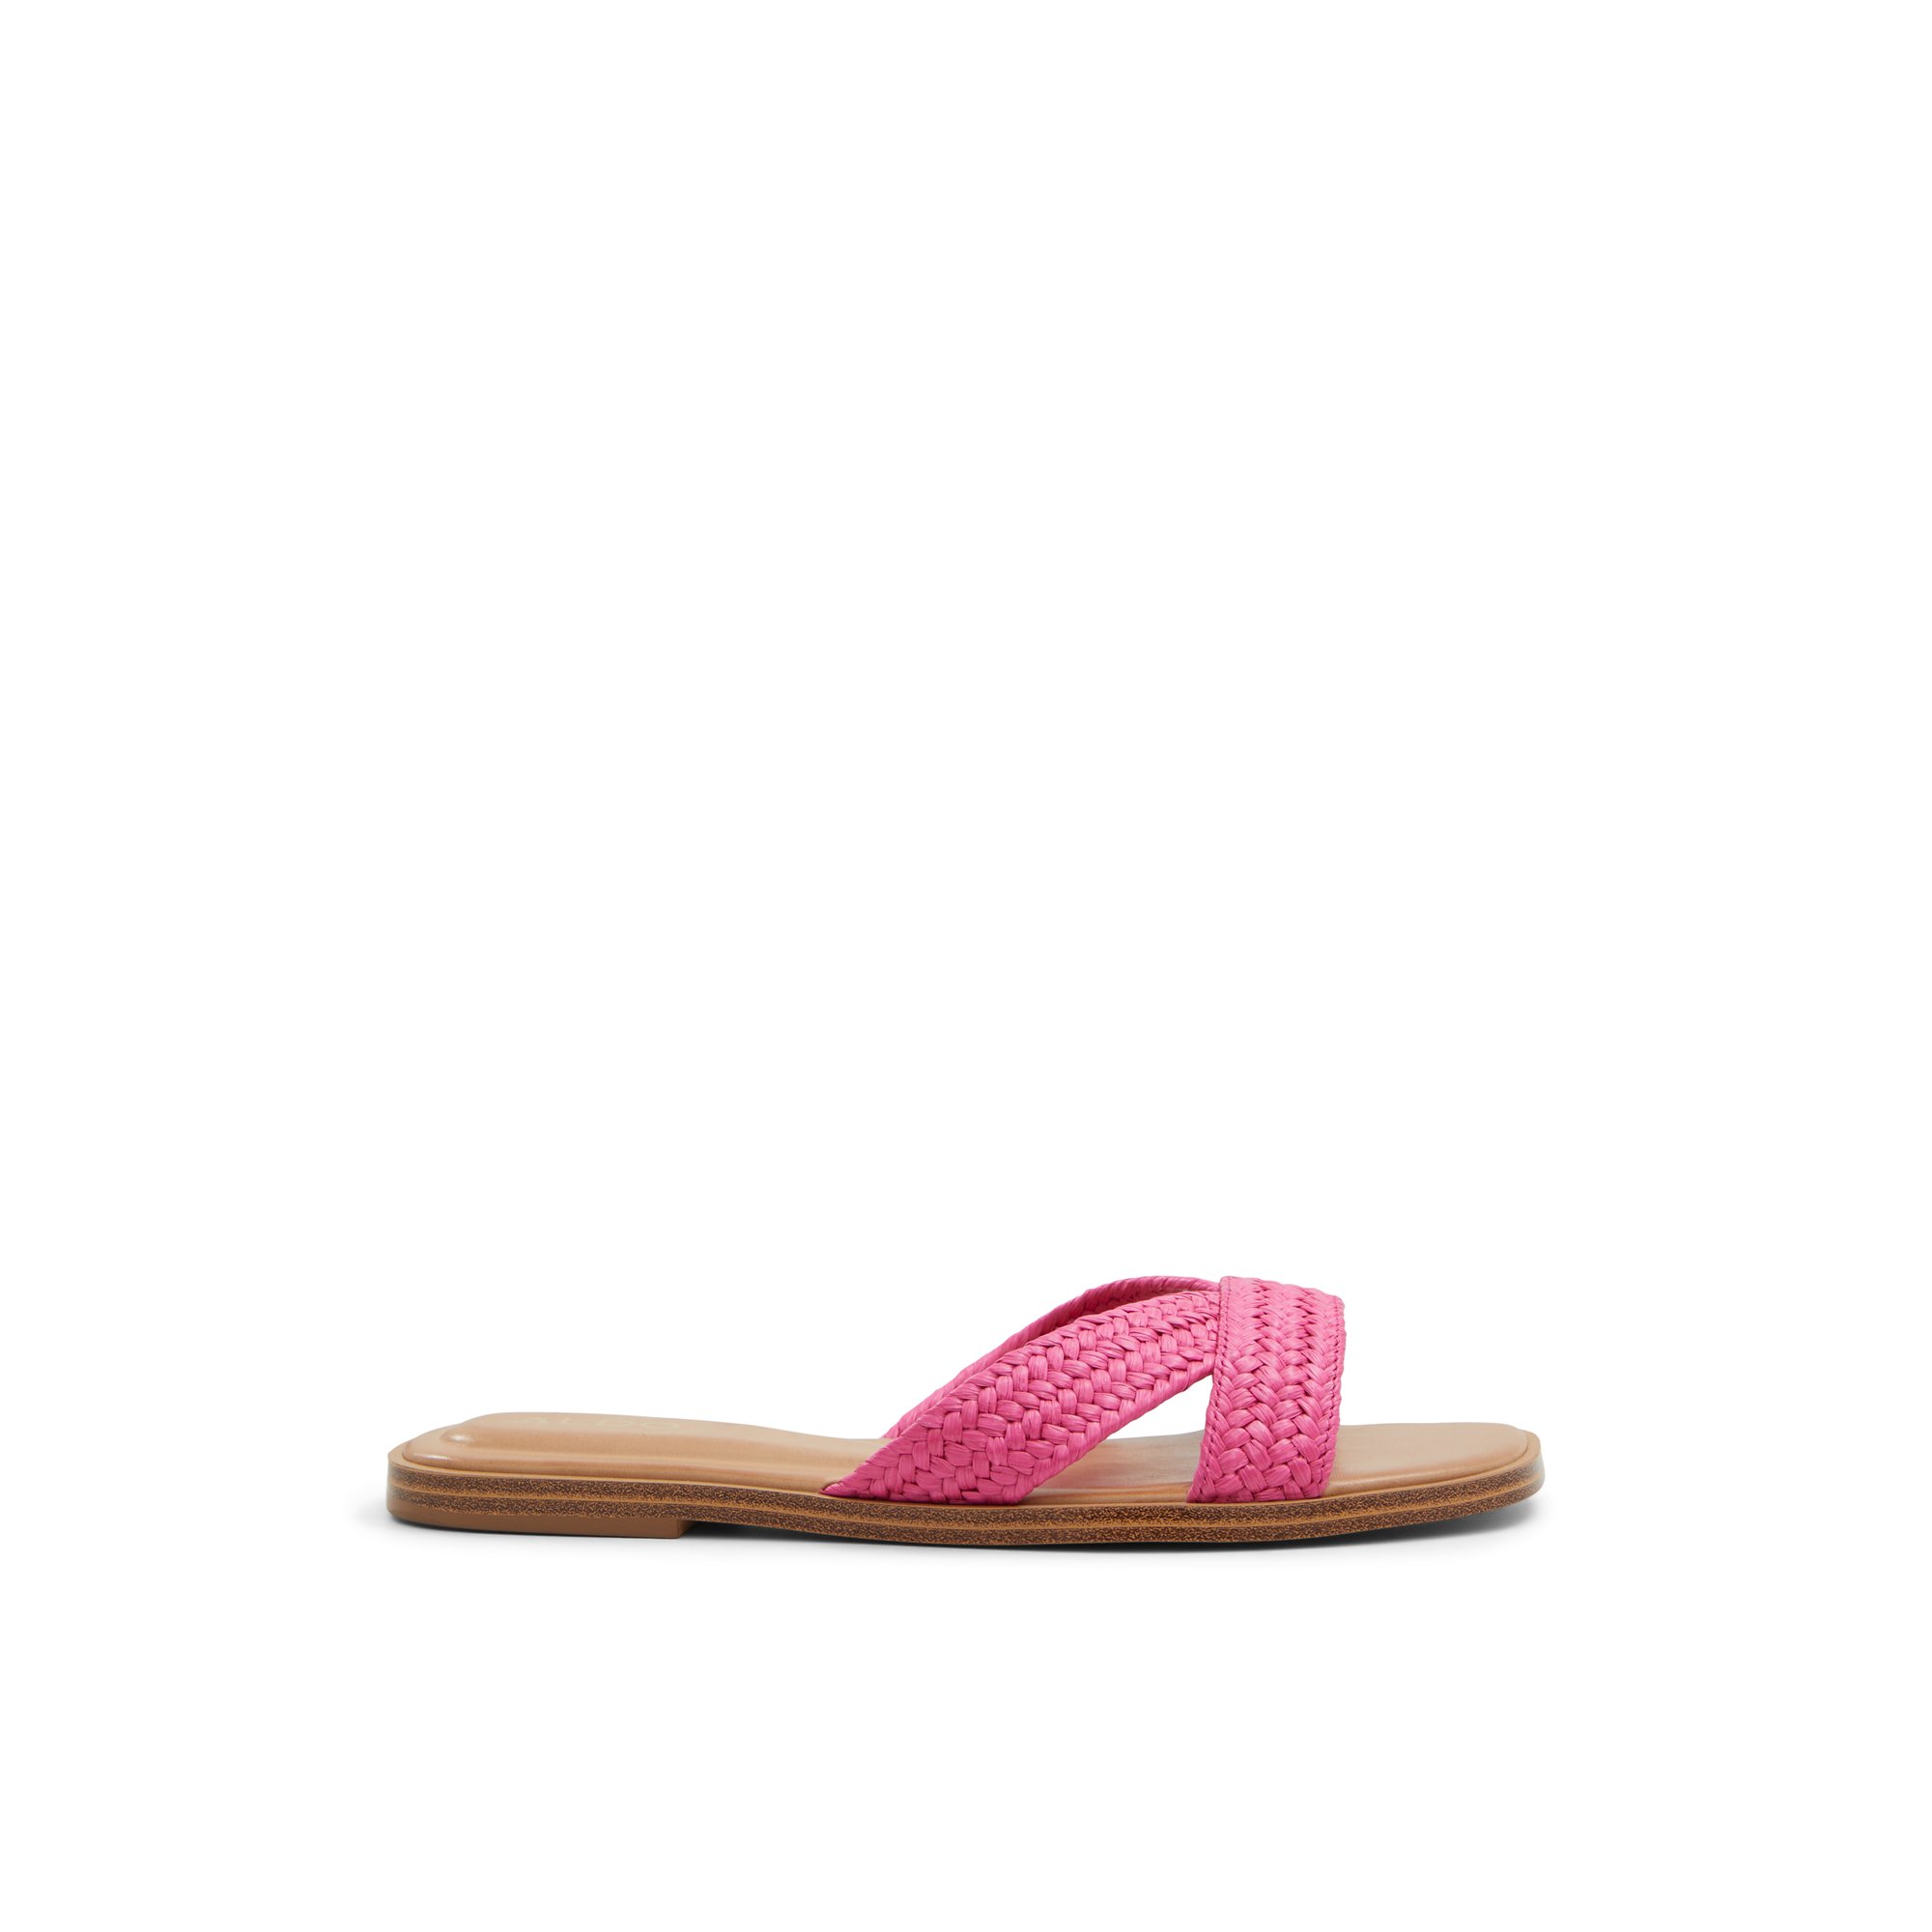 ALDO Caria - Women's Flat Sandals - Pink